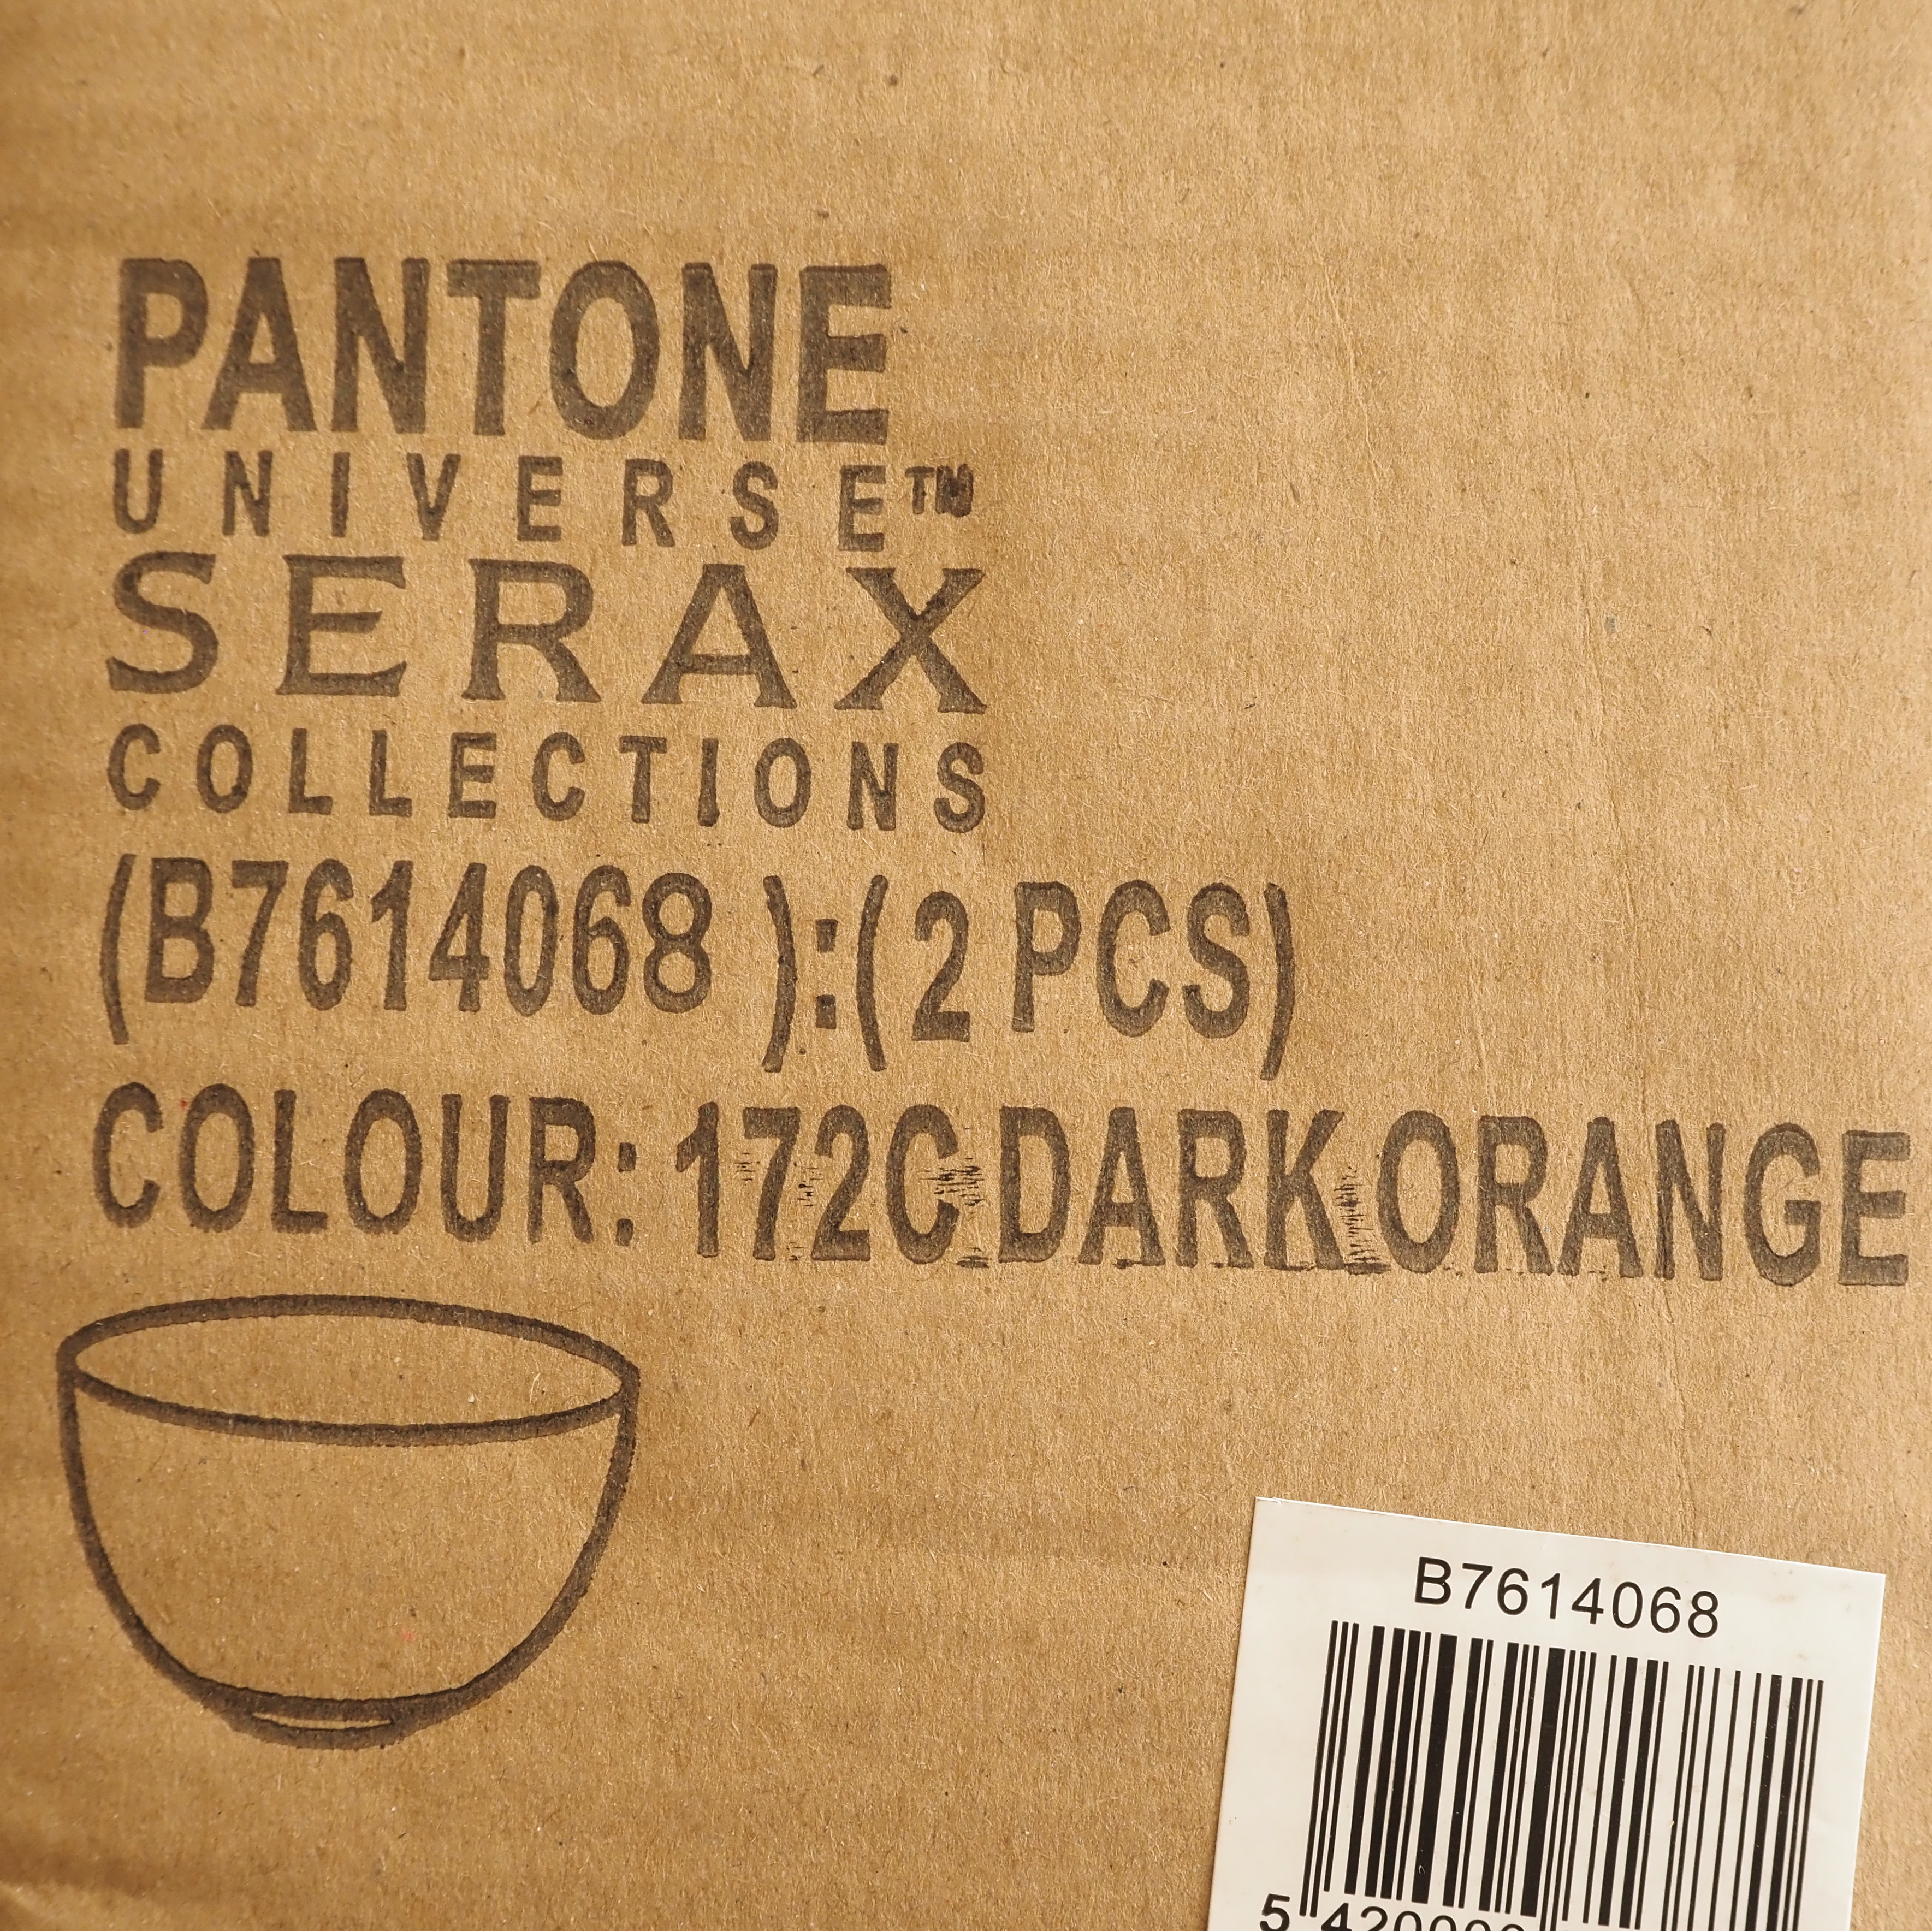 Box of 2 bowls 'Pantone' by Luca Trazzi for Serax - Dark orange